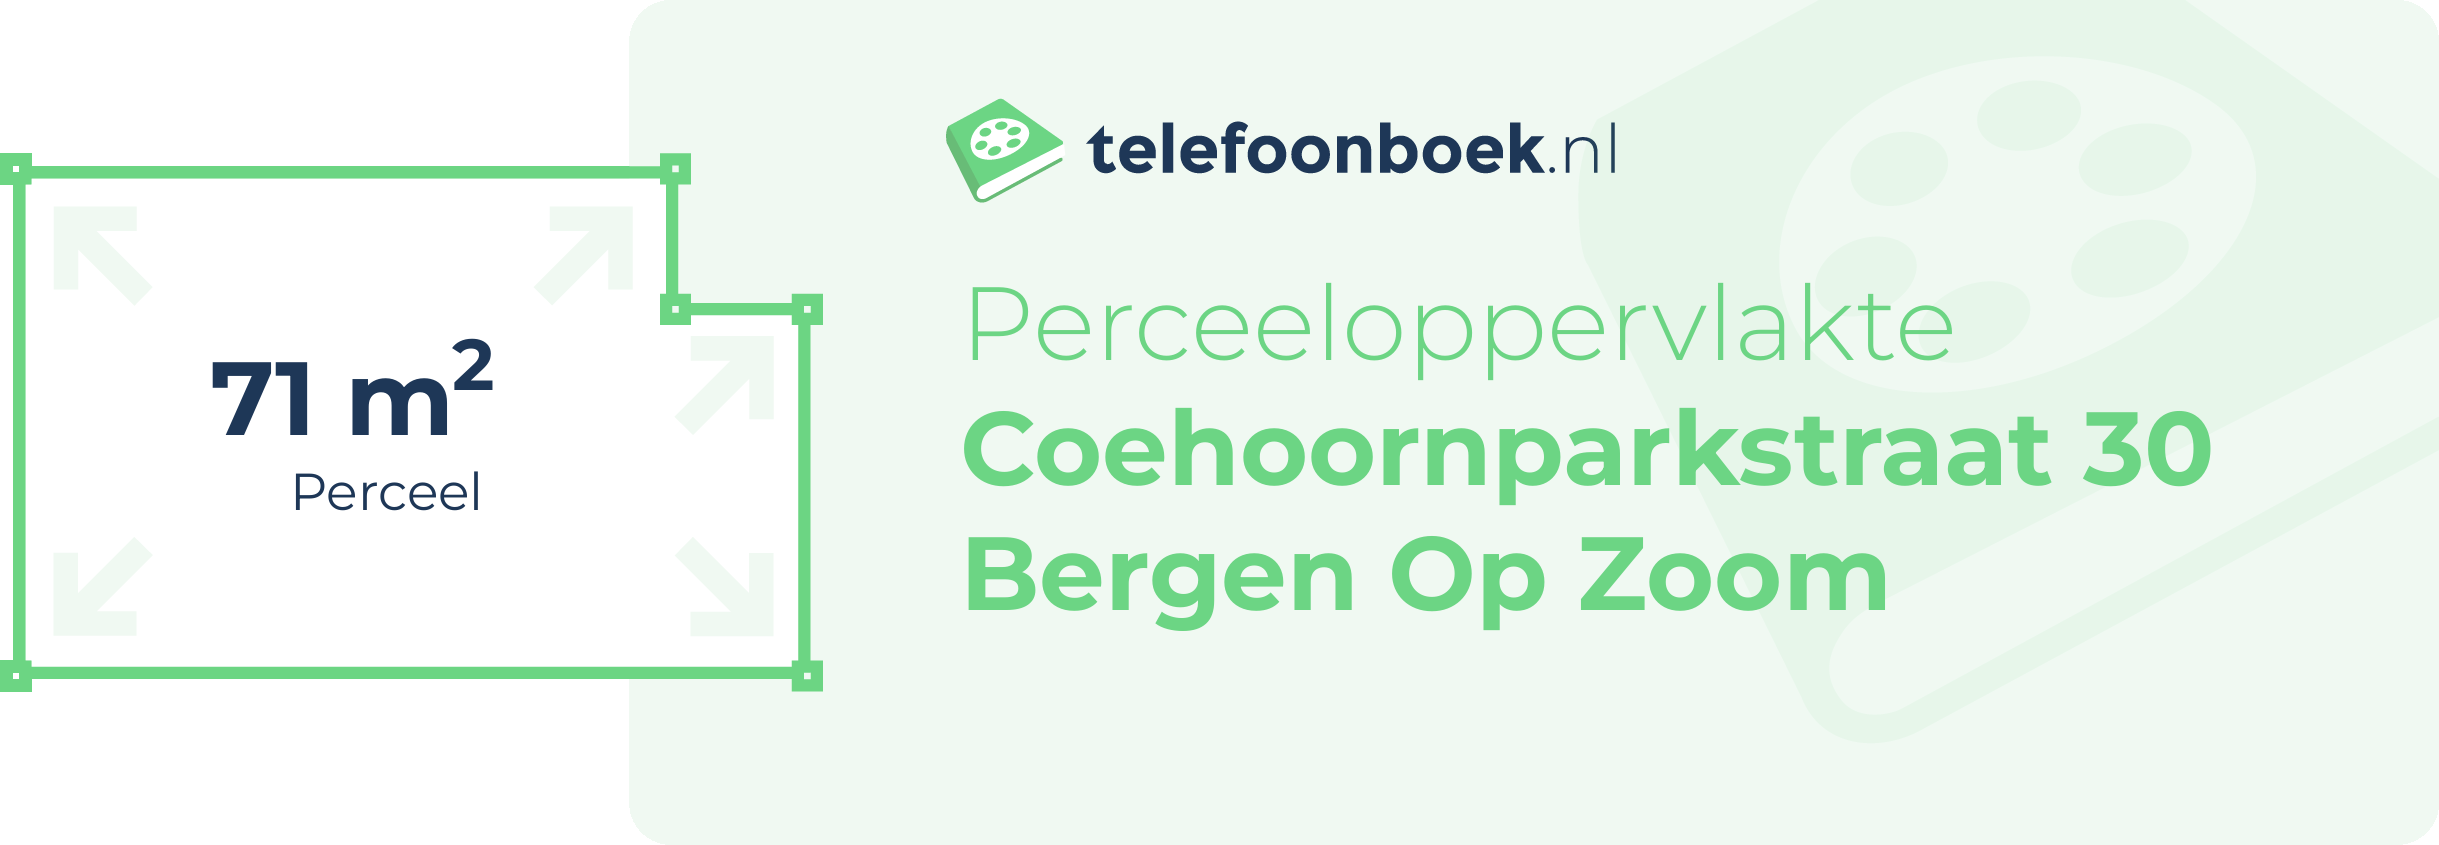 Perceeloppervlakte Coehoornparkstraat 30 Bergen Op Zoom